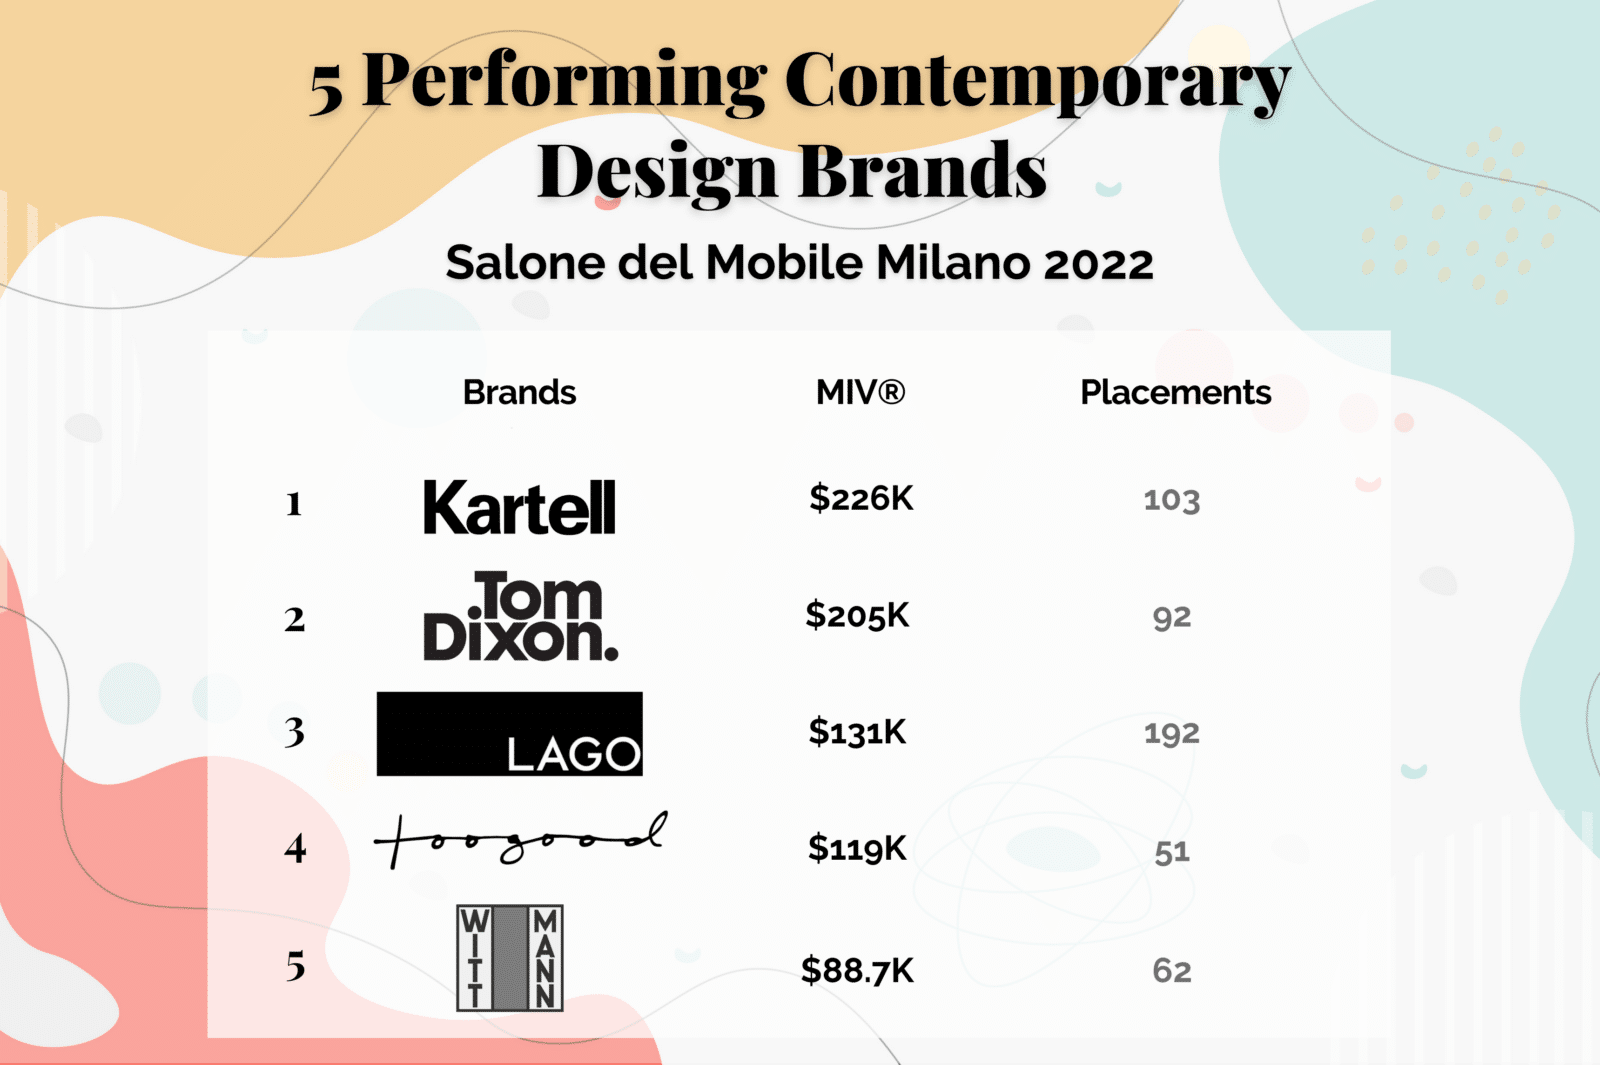 Salone del Mobile 2022: A Guide to Fashion Brands' Design Projects – WWD